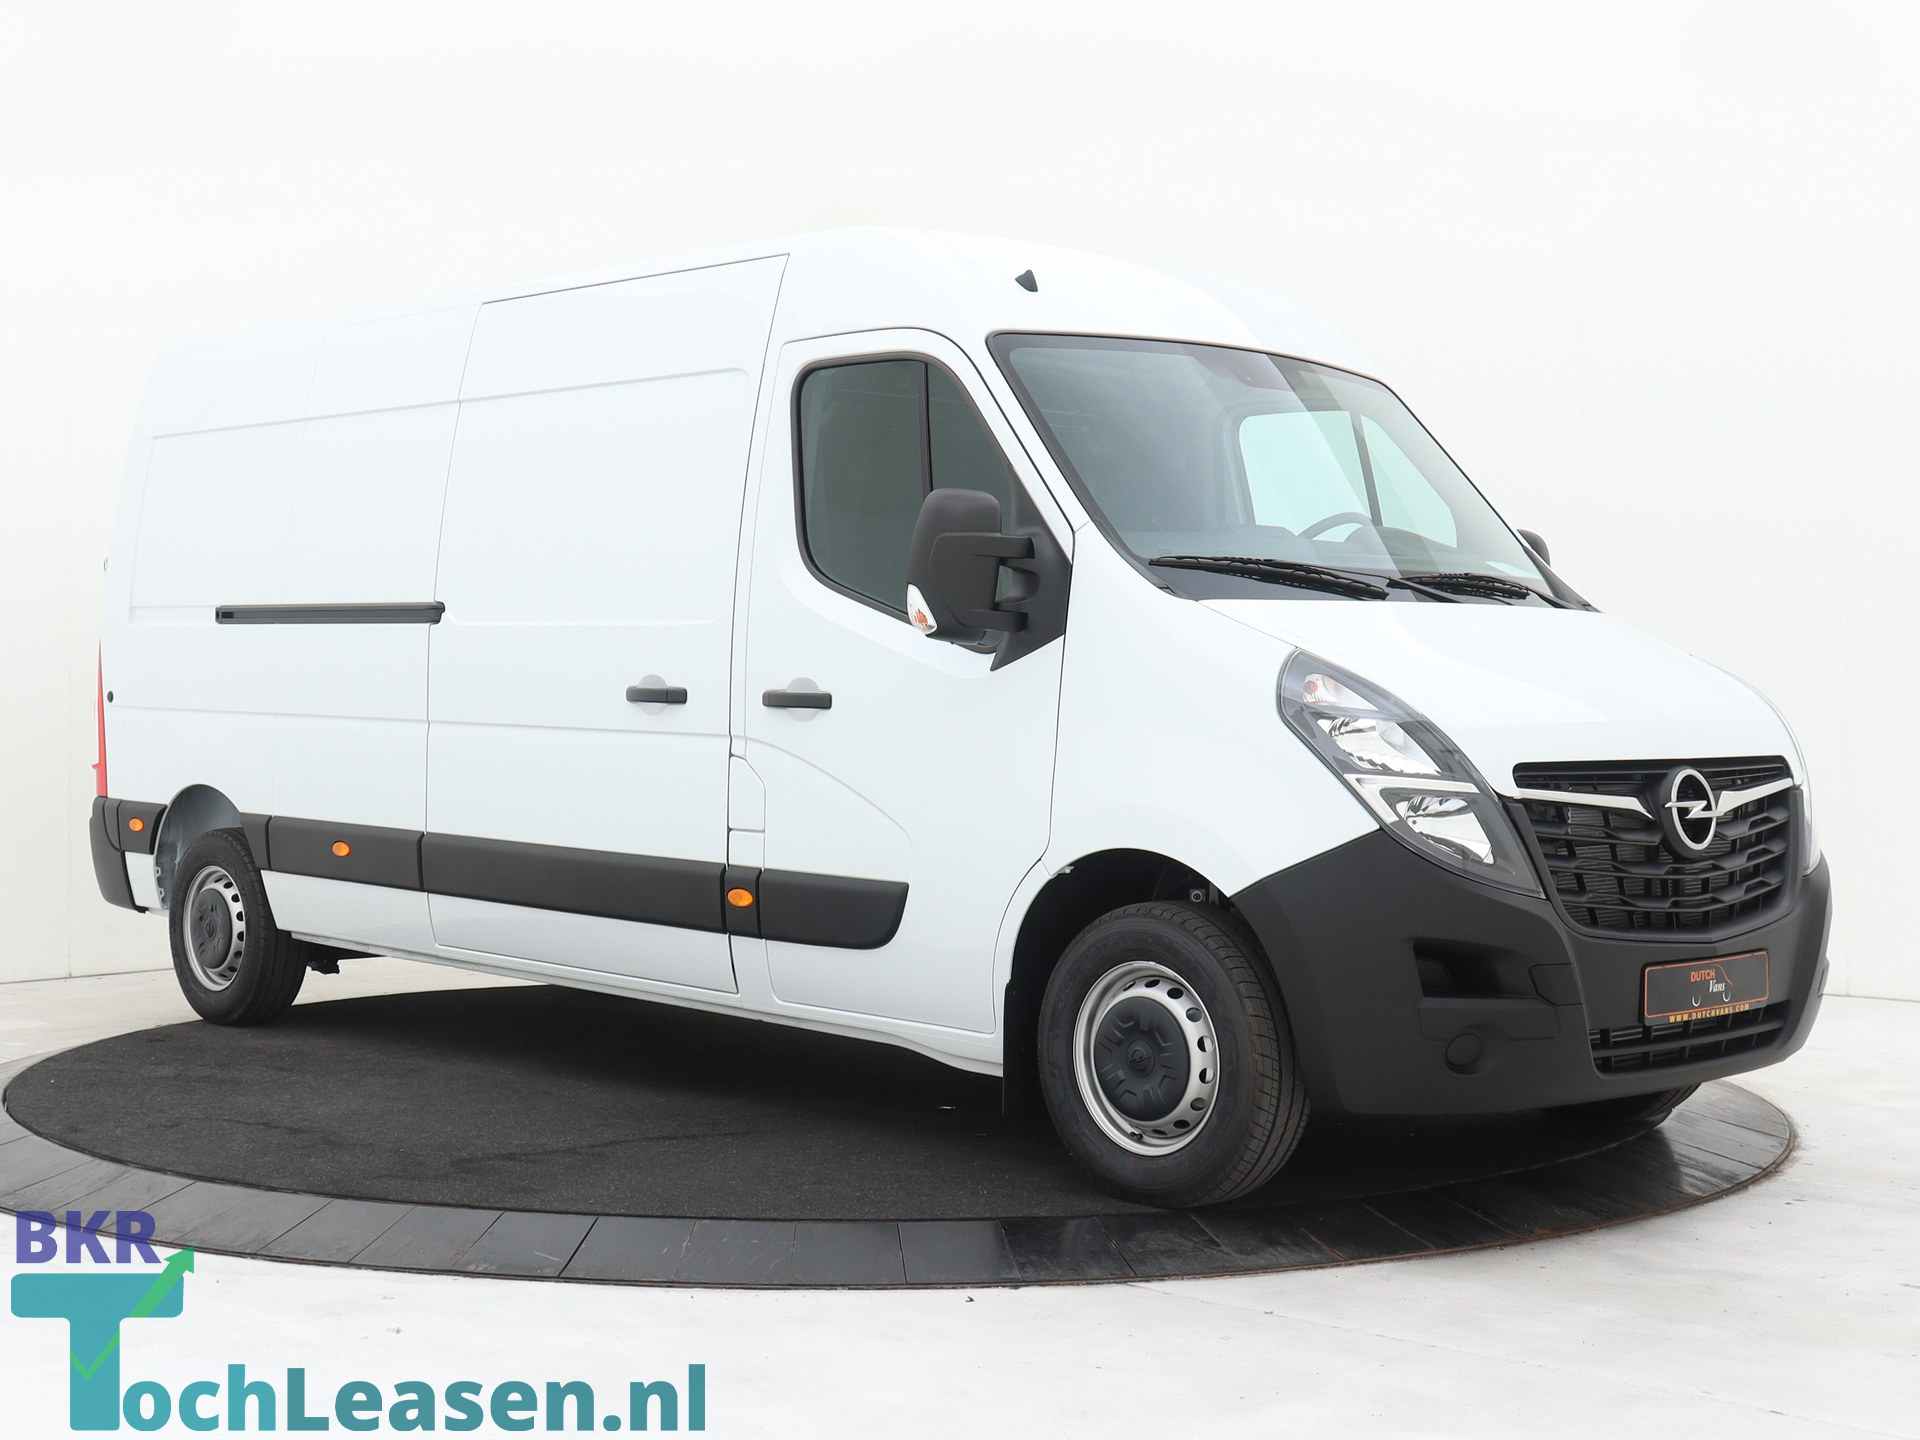 BKRTochLeasen.nl - Opel Movano - L3H2 - wit 15